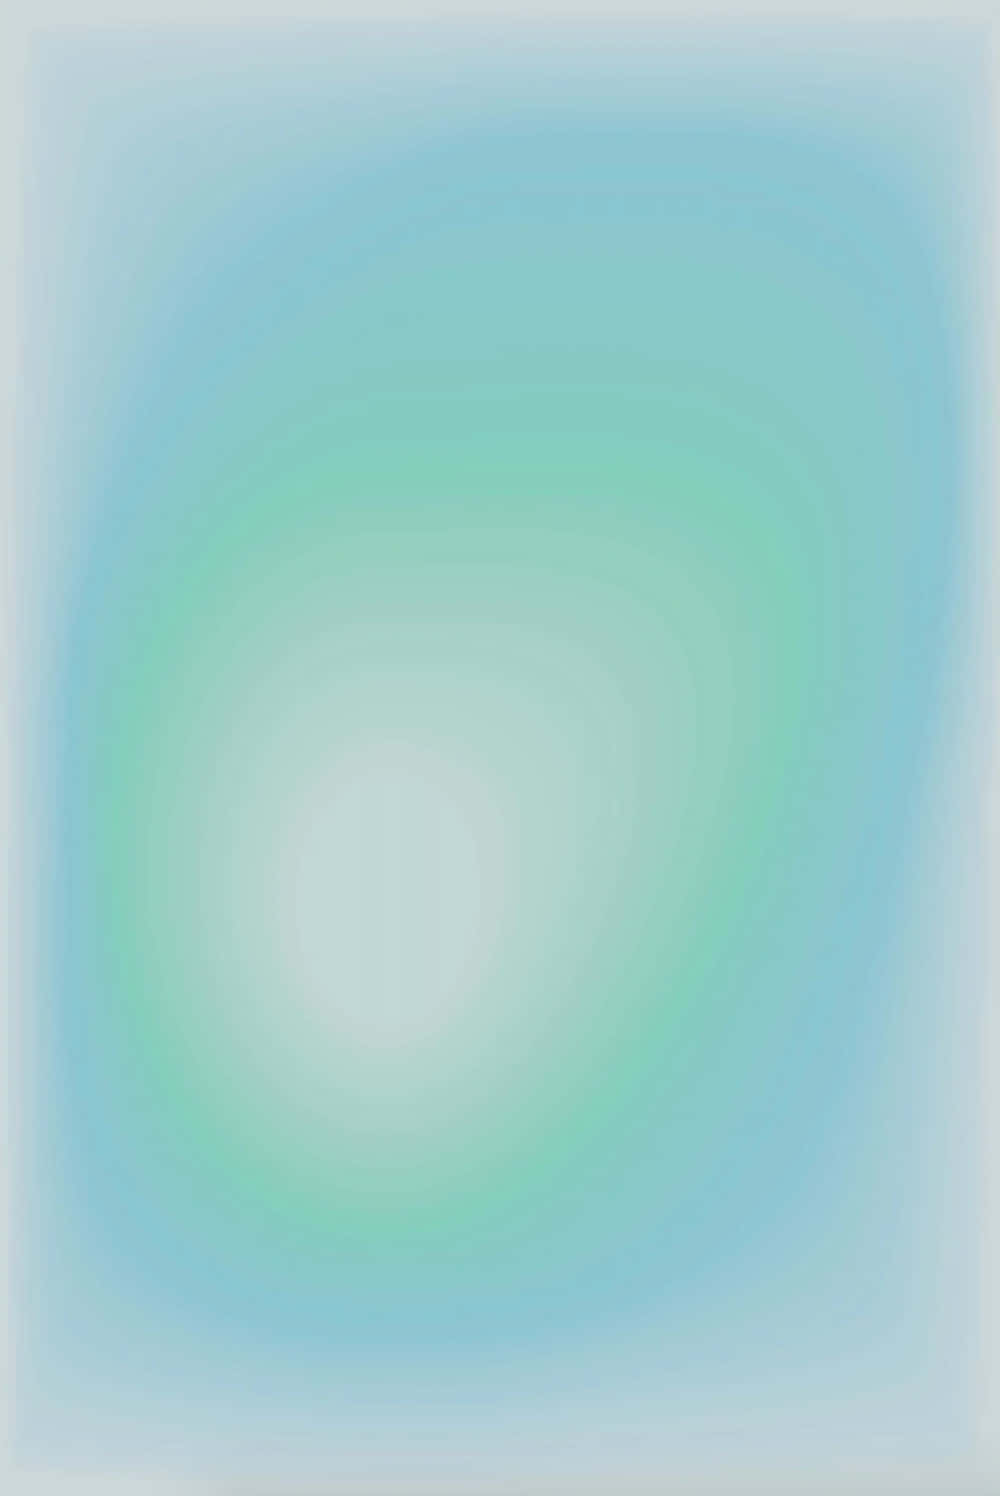 En blå og grøn abstrakte maleri på en hvid baggrund. Wallpaper